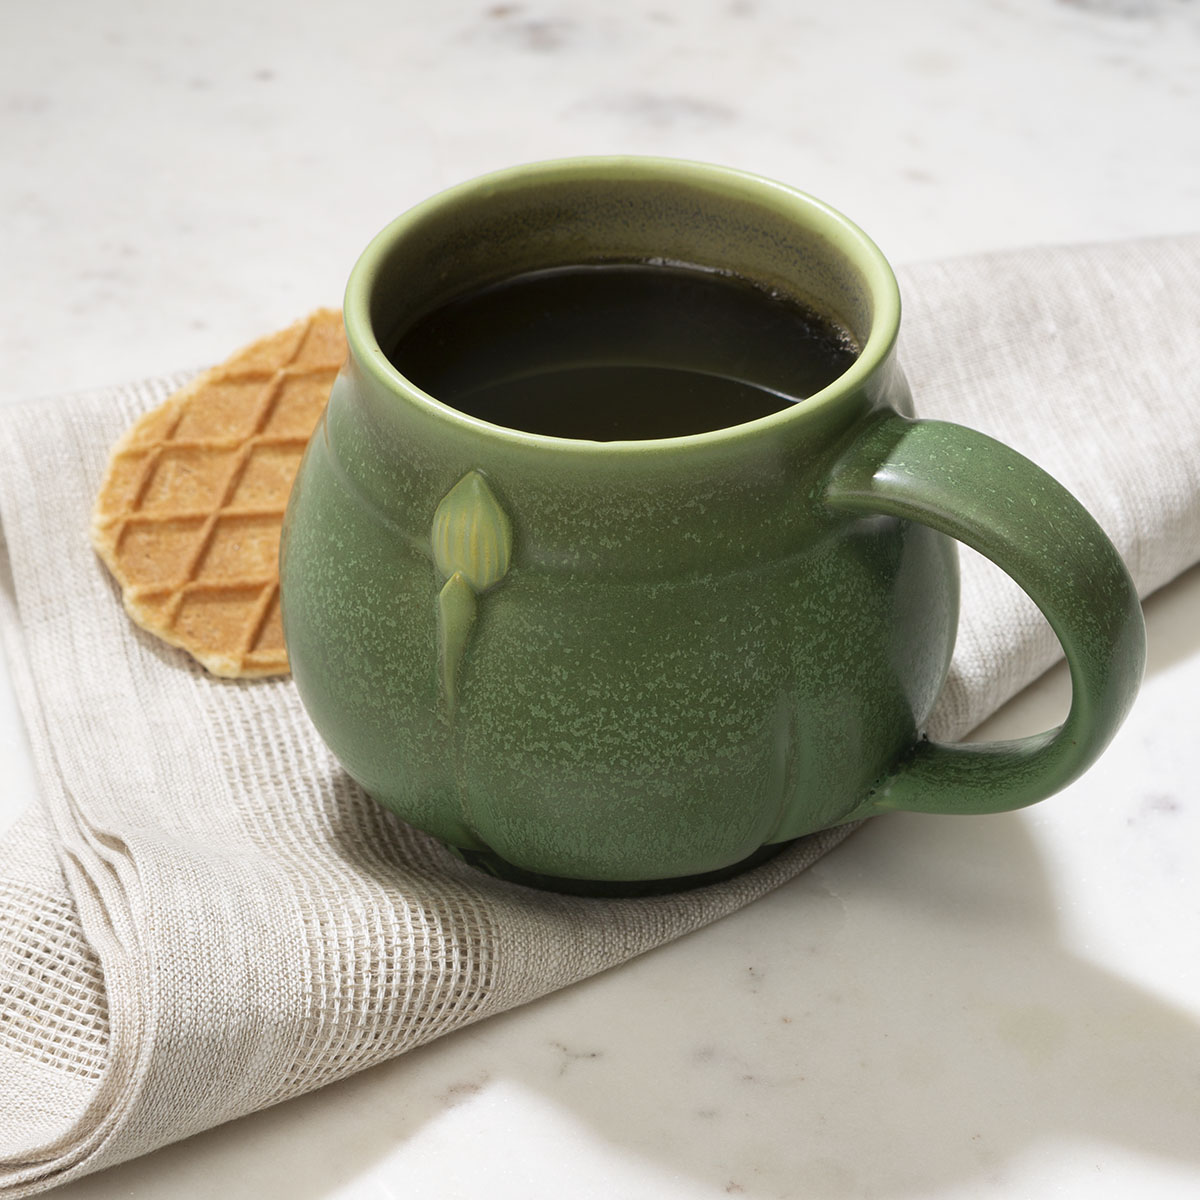 Midcentury Modern Coffee Mug – refined design, handmade in USA